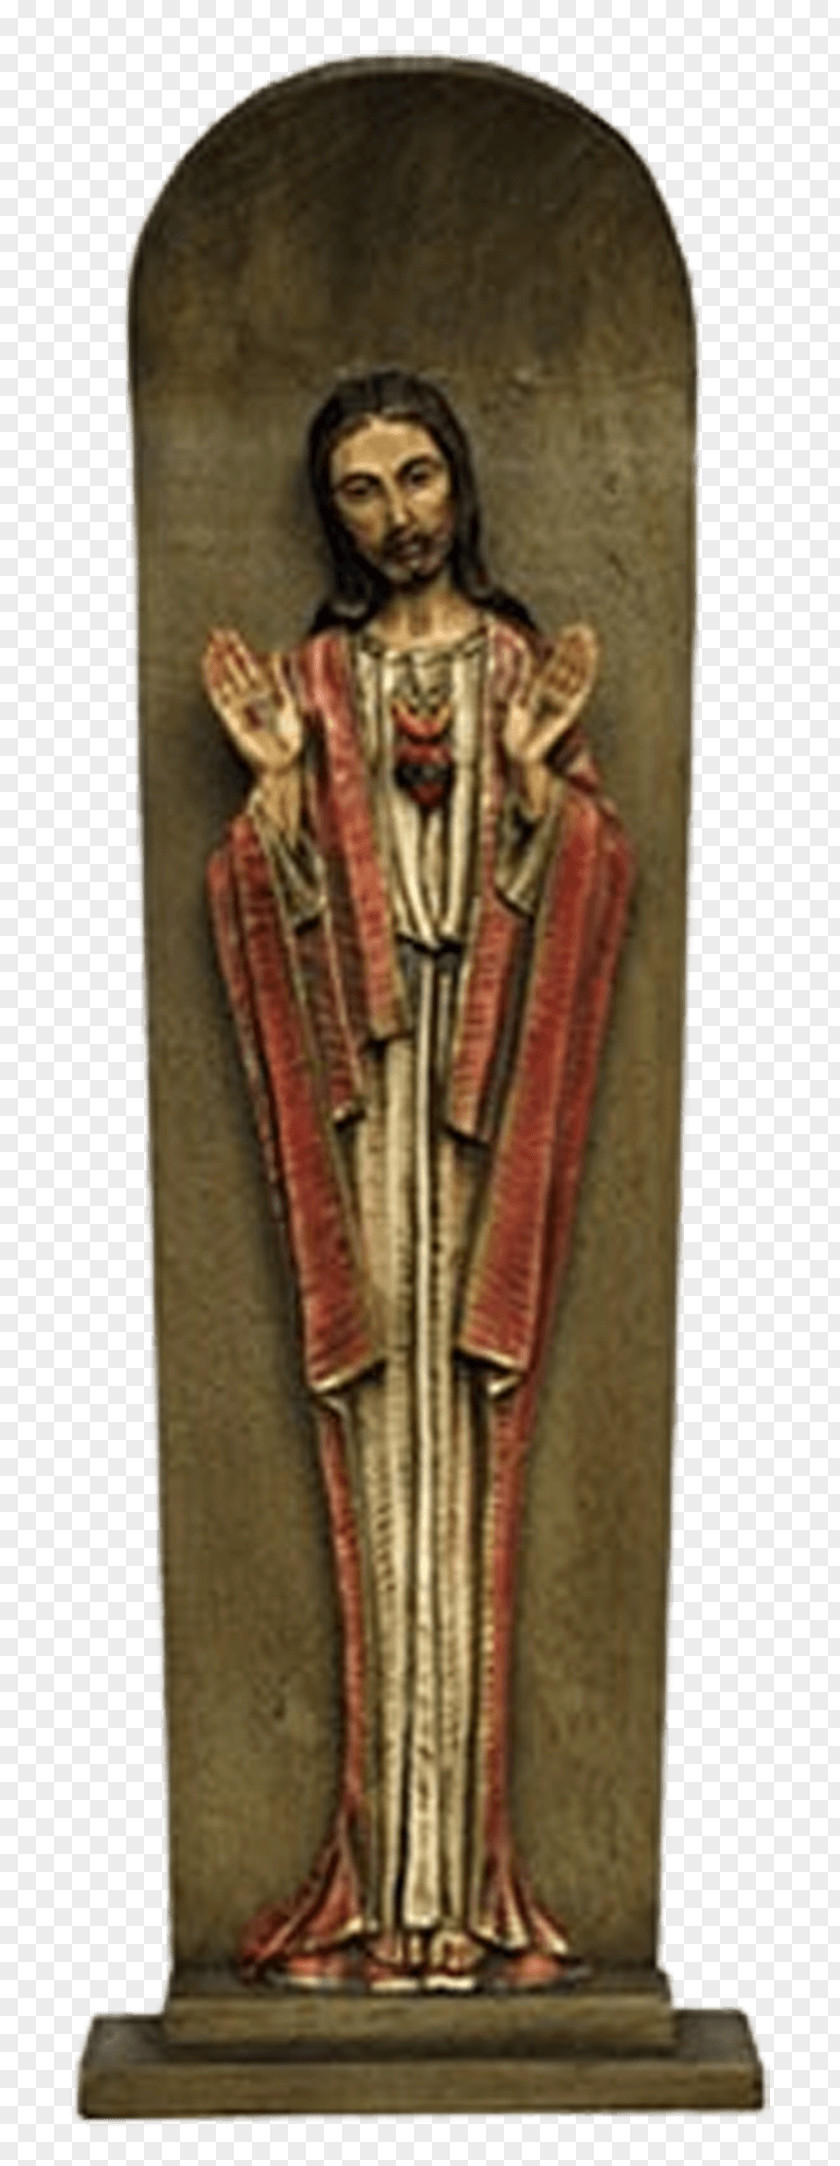 Jesus Middle Ages Statue Classical Sculpture Ancient Greece PNG